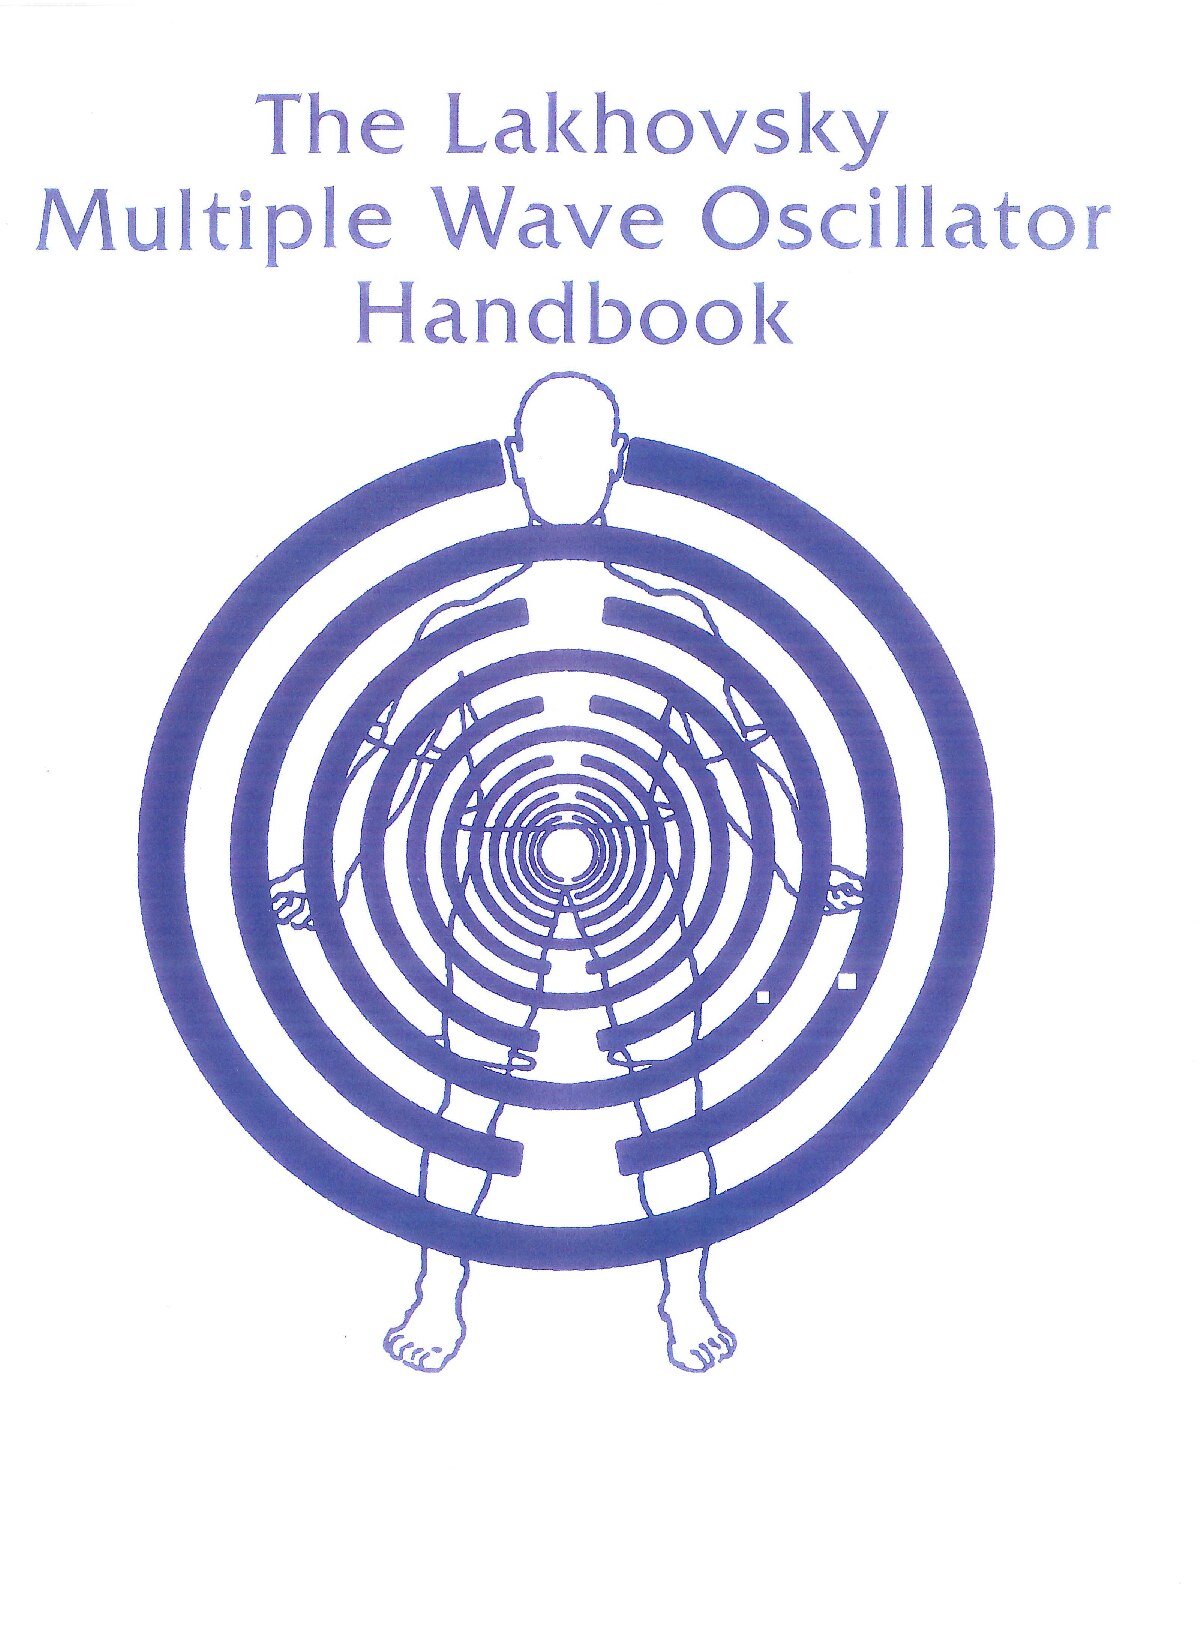 The Lakhovsky Multiple Wave Oscillator Handbook